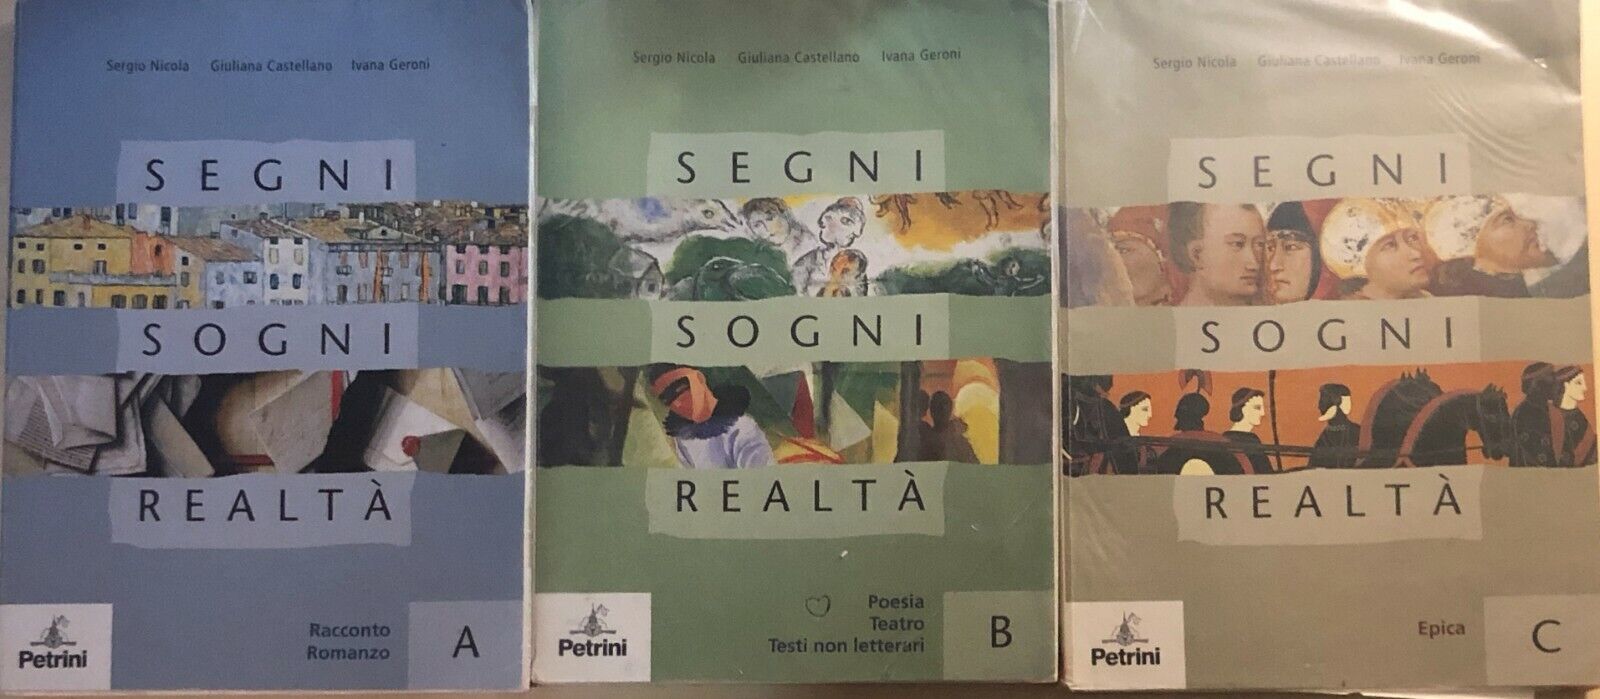 Segni, sogni, realt? A+B+C di AA.VV., 2006, Petrini